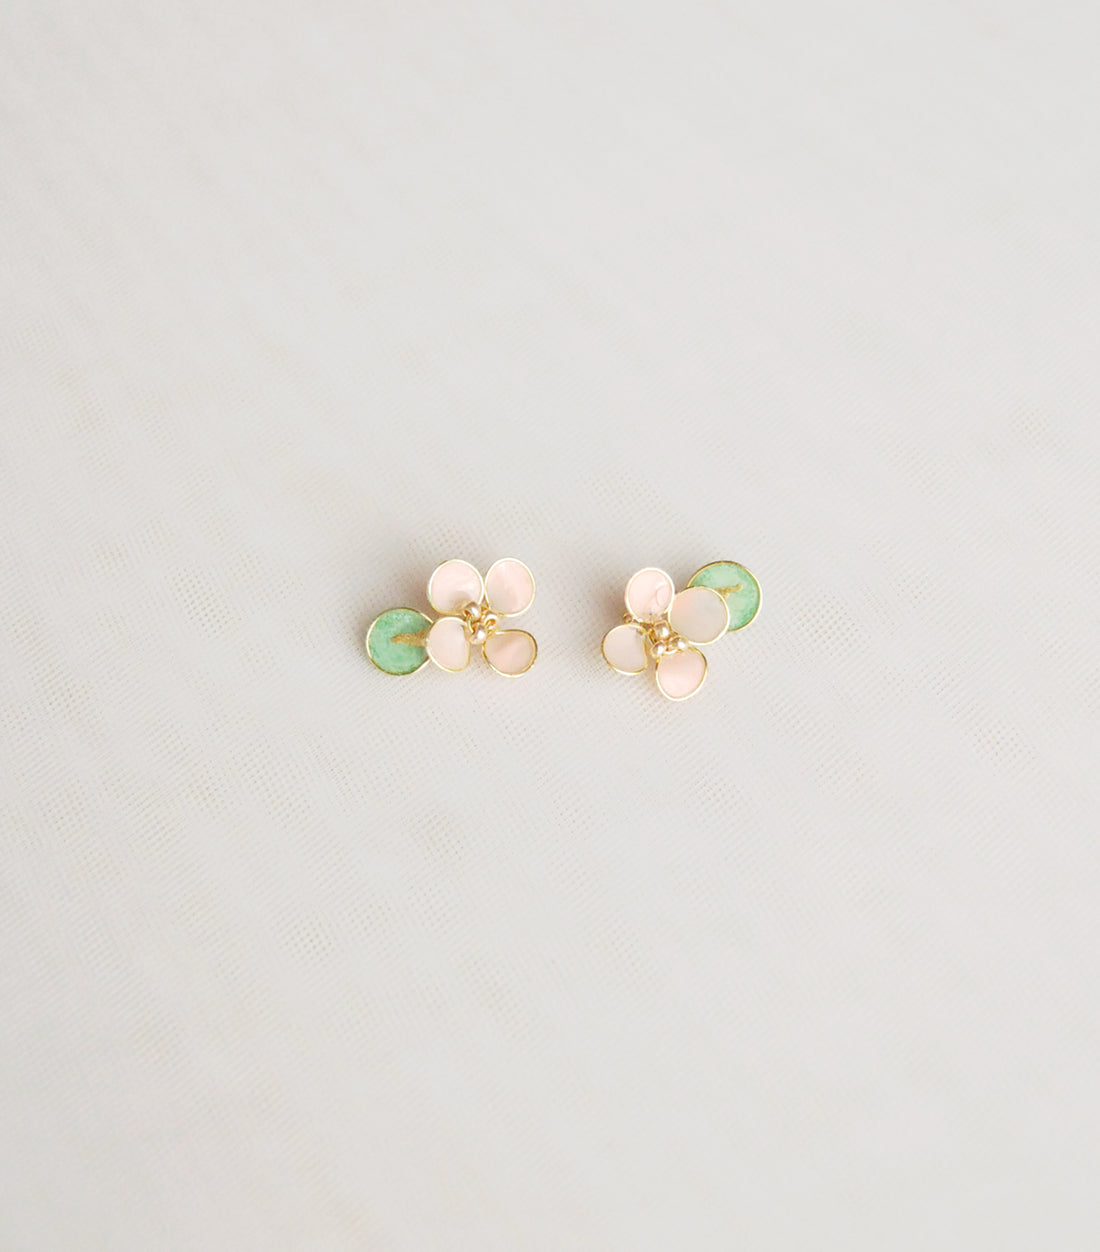 Flowers and eucalyptus earrings